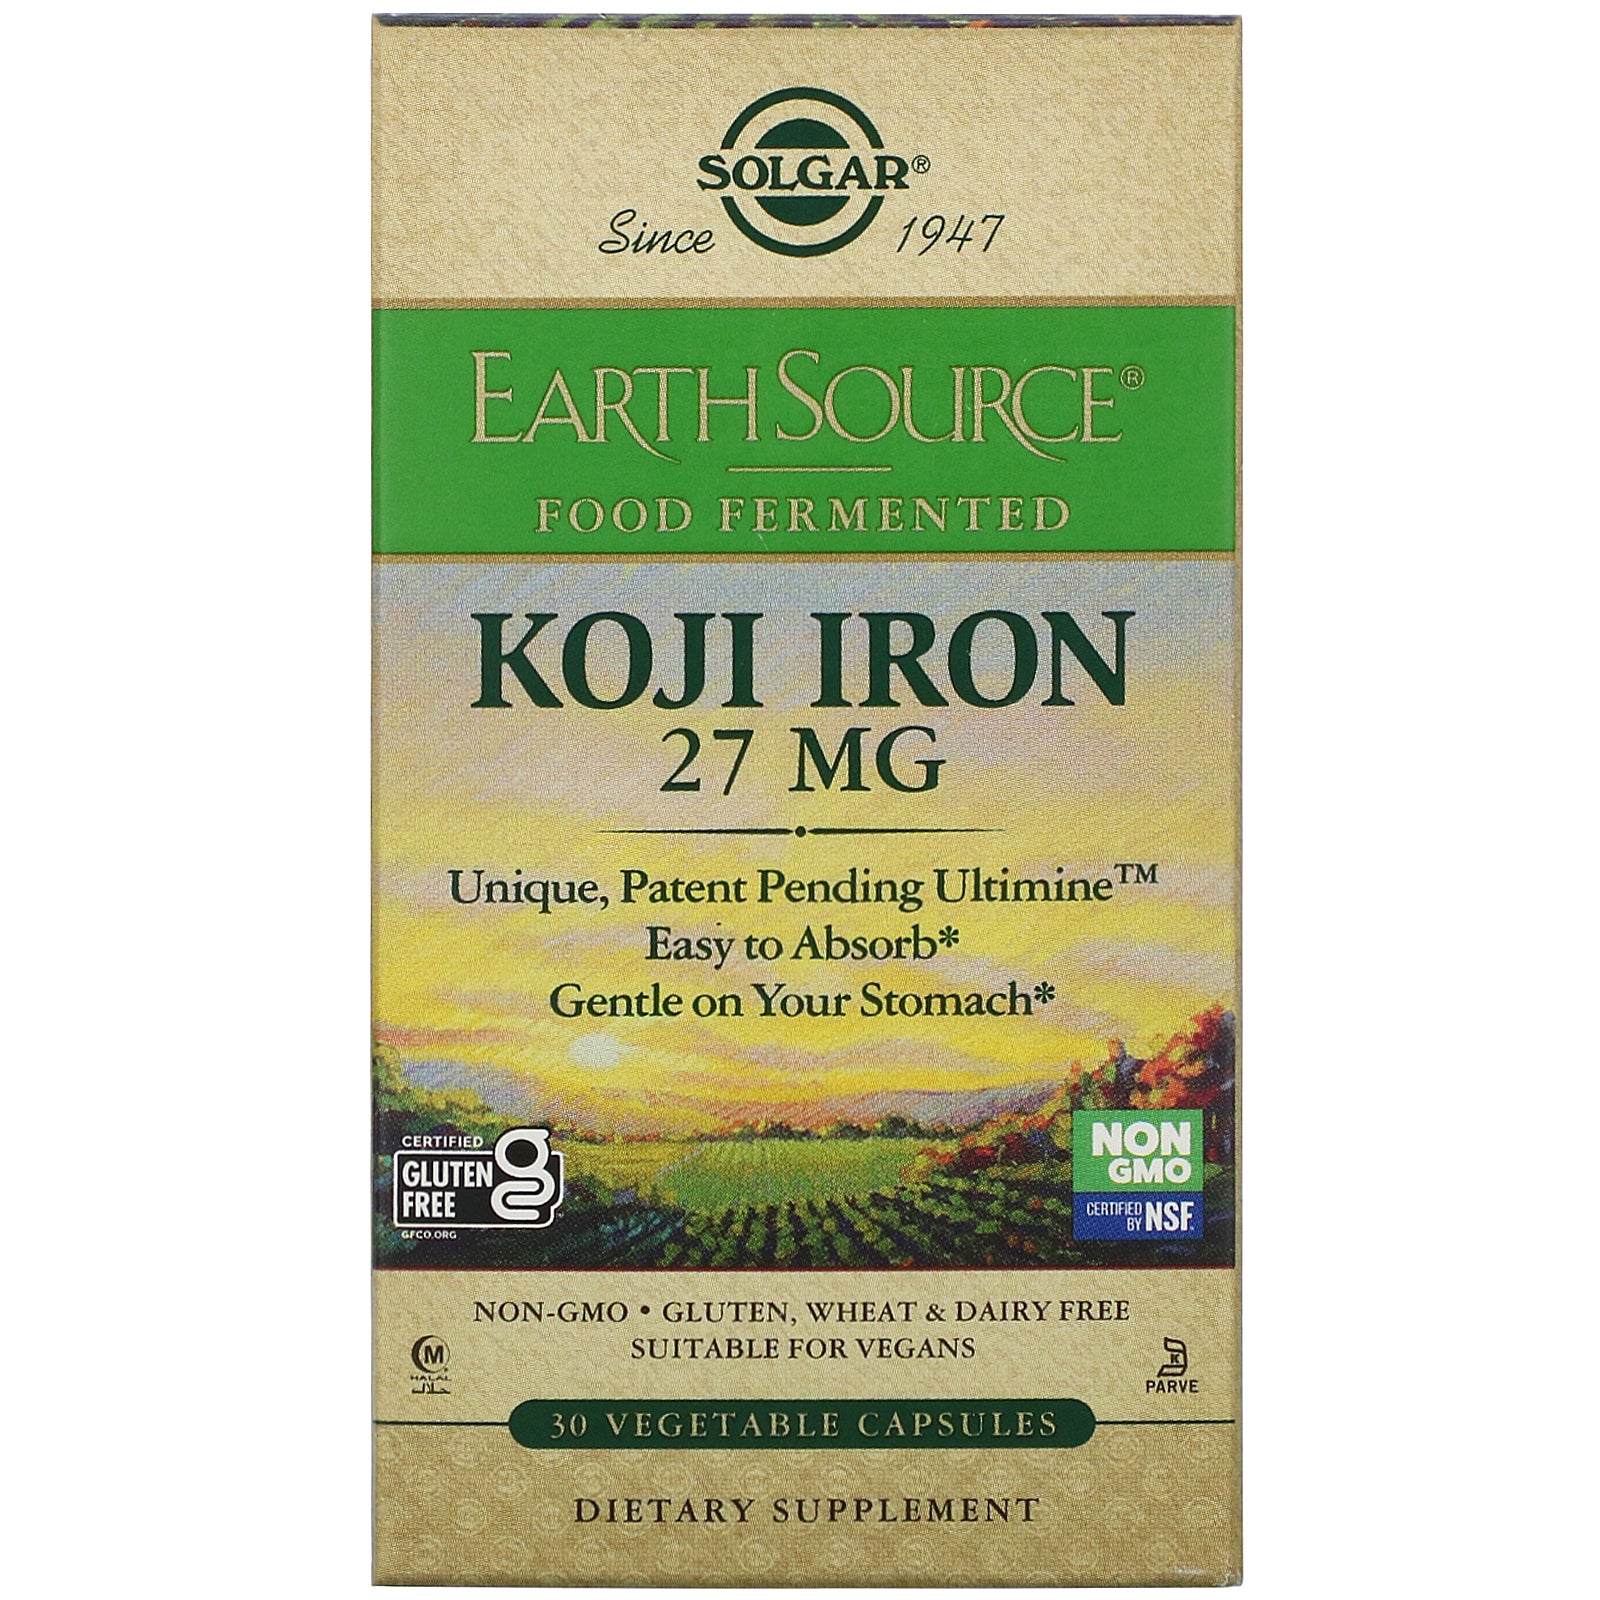 Solgar, EarthSource Food Fermented, Koji Iron, 27 mg, 30 Vegetable Capsules